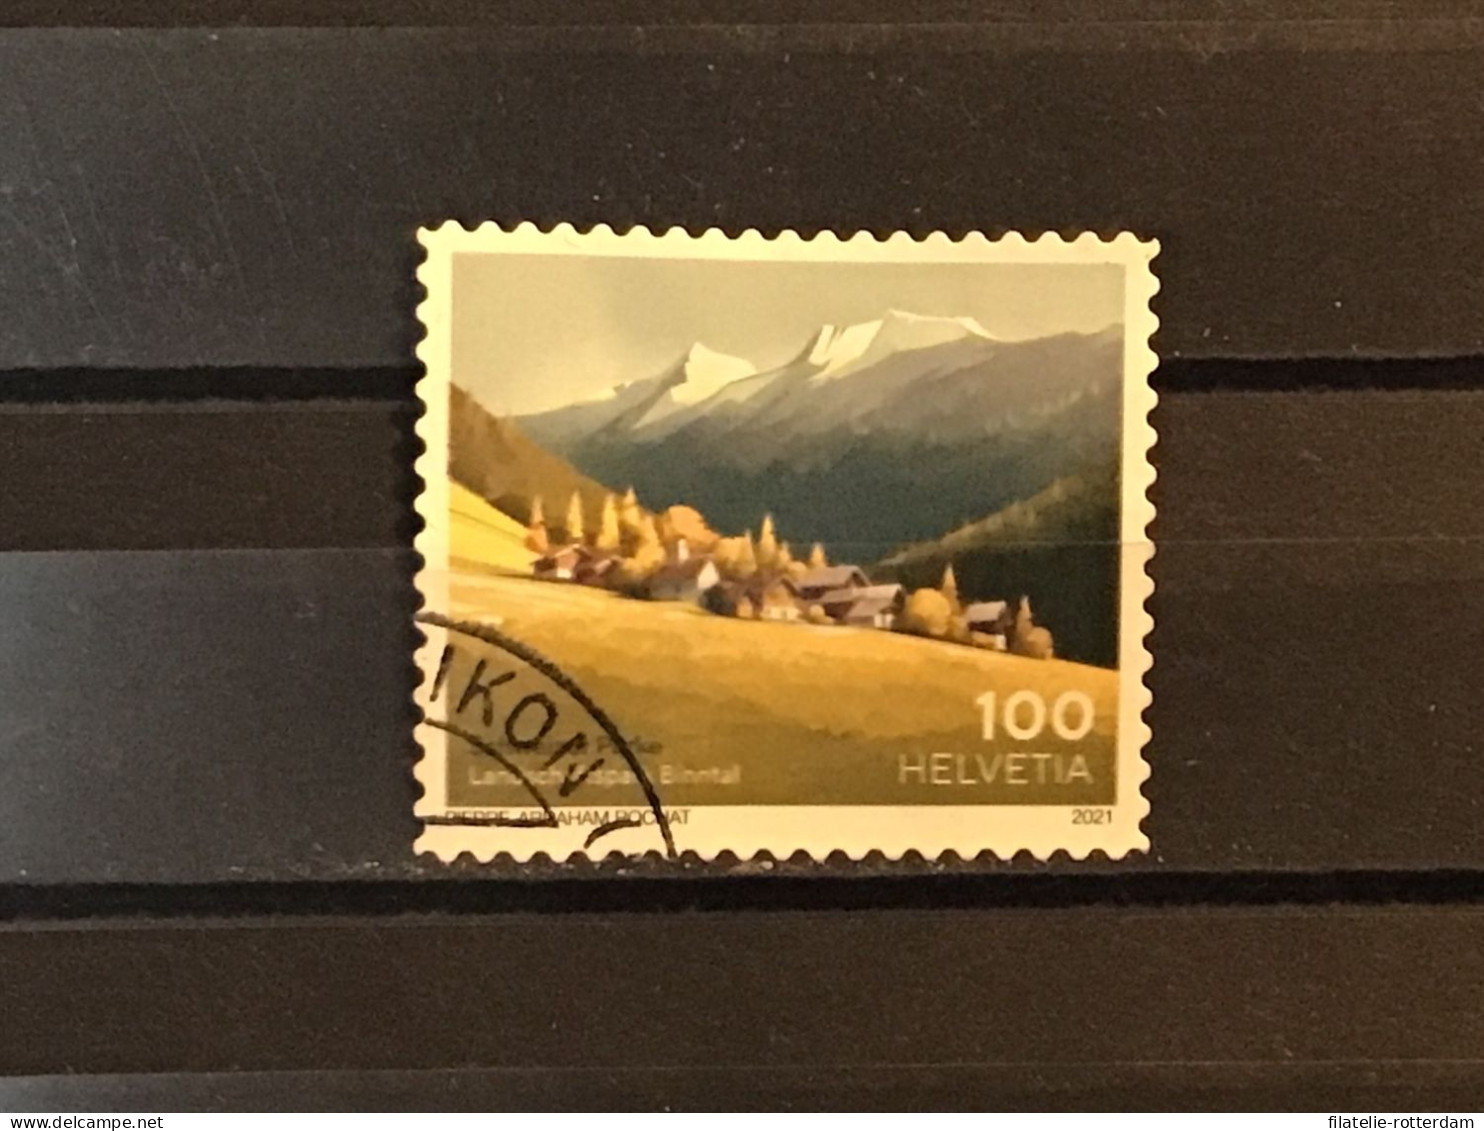 Switzerland / Zwitserland - Tourism, Swiss Parks (100) 2021 - Used Stamps